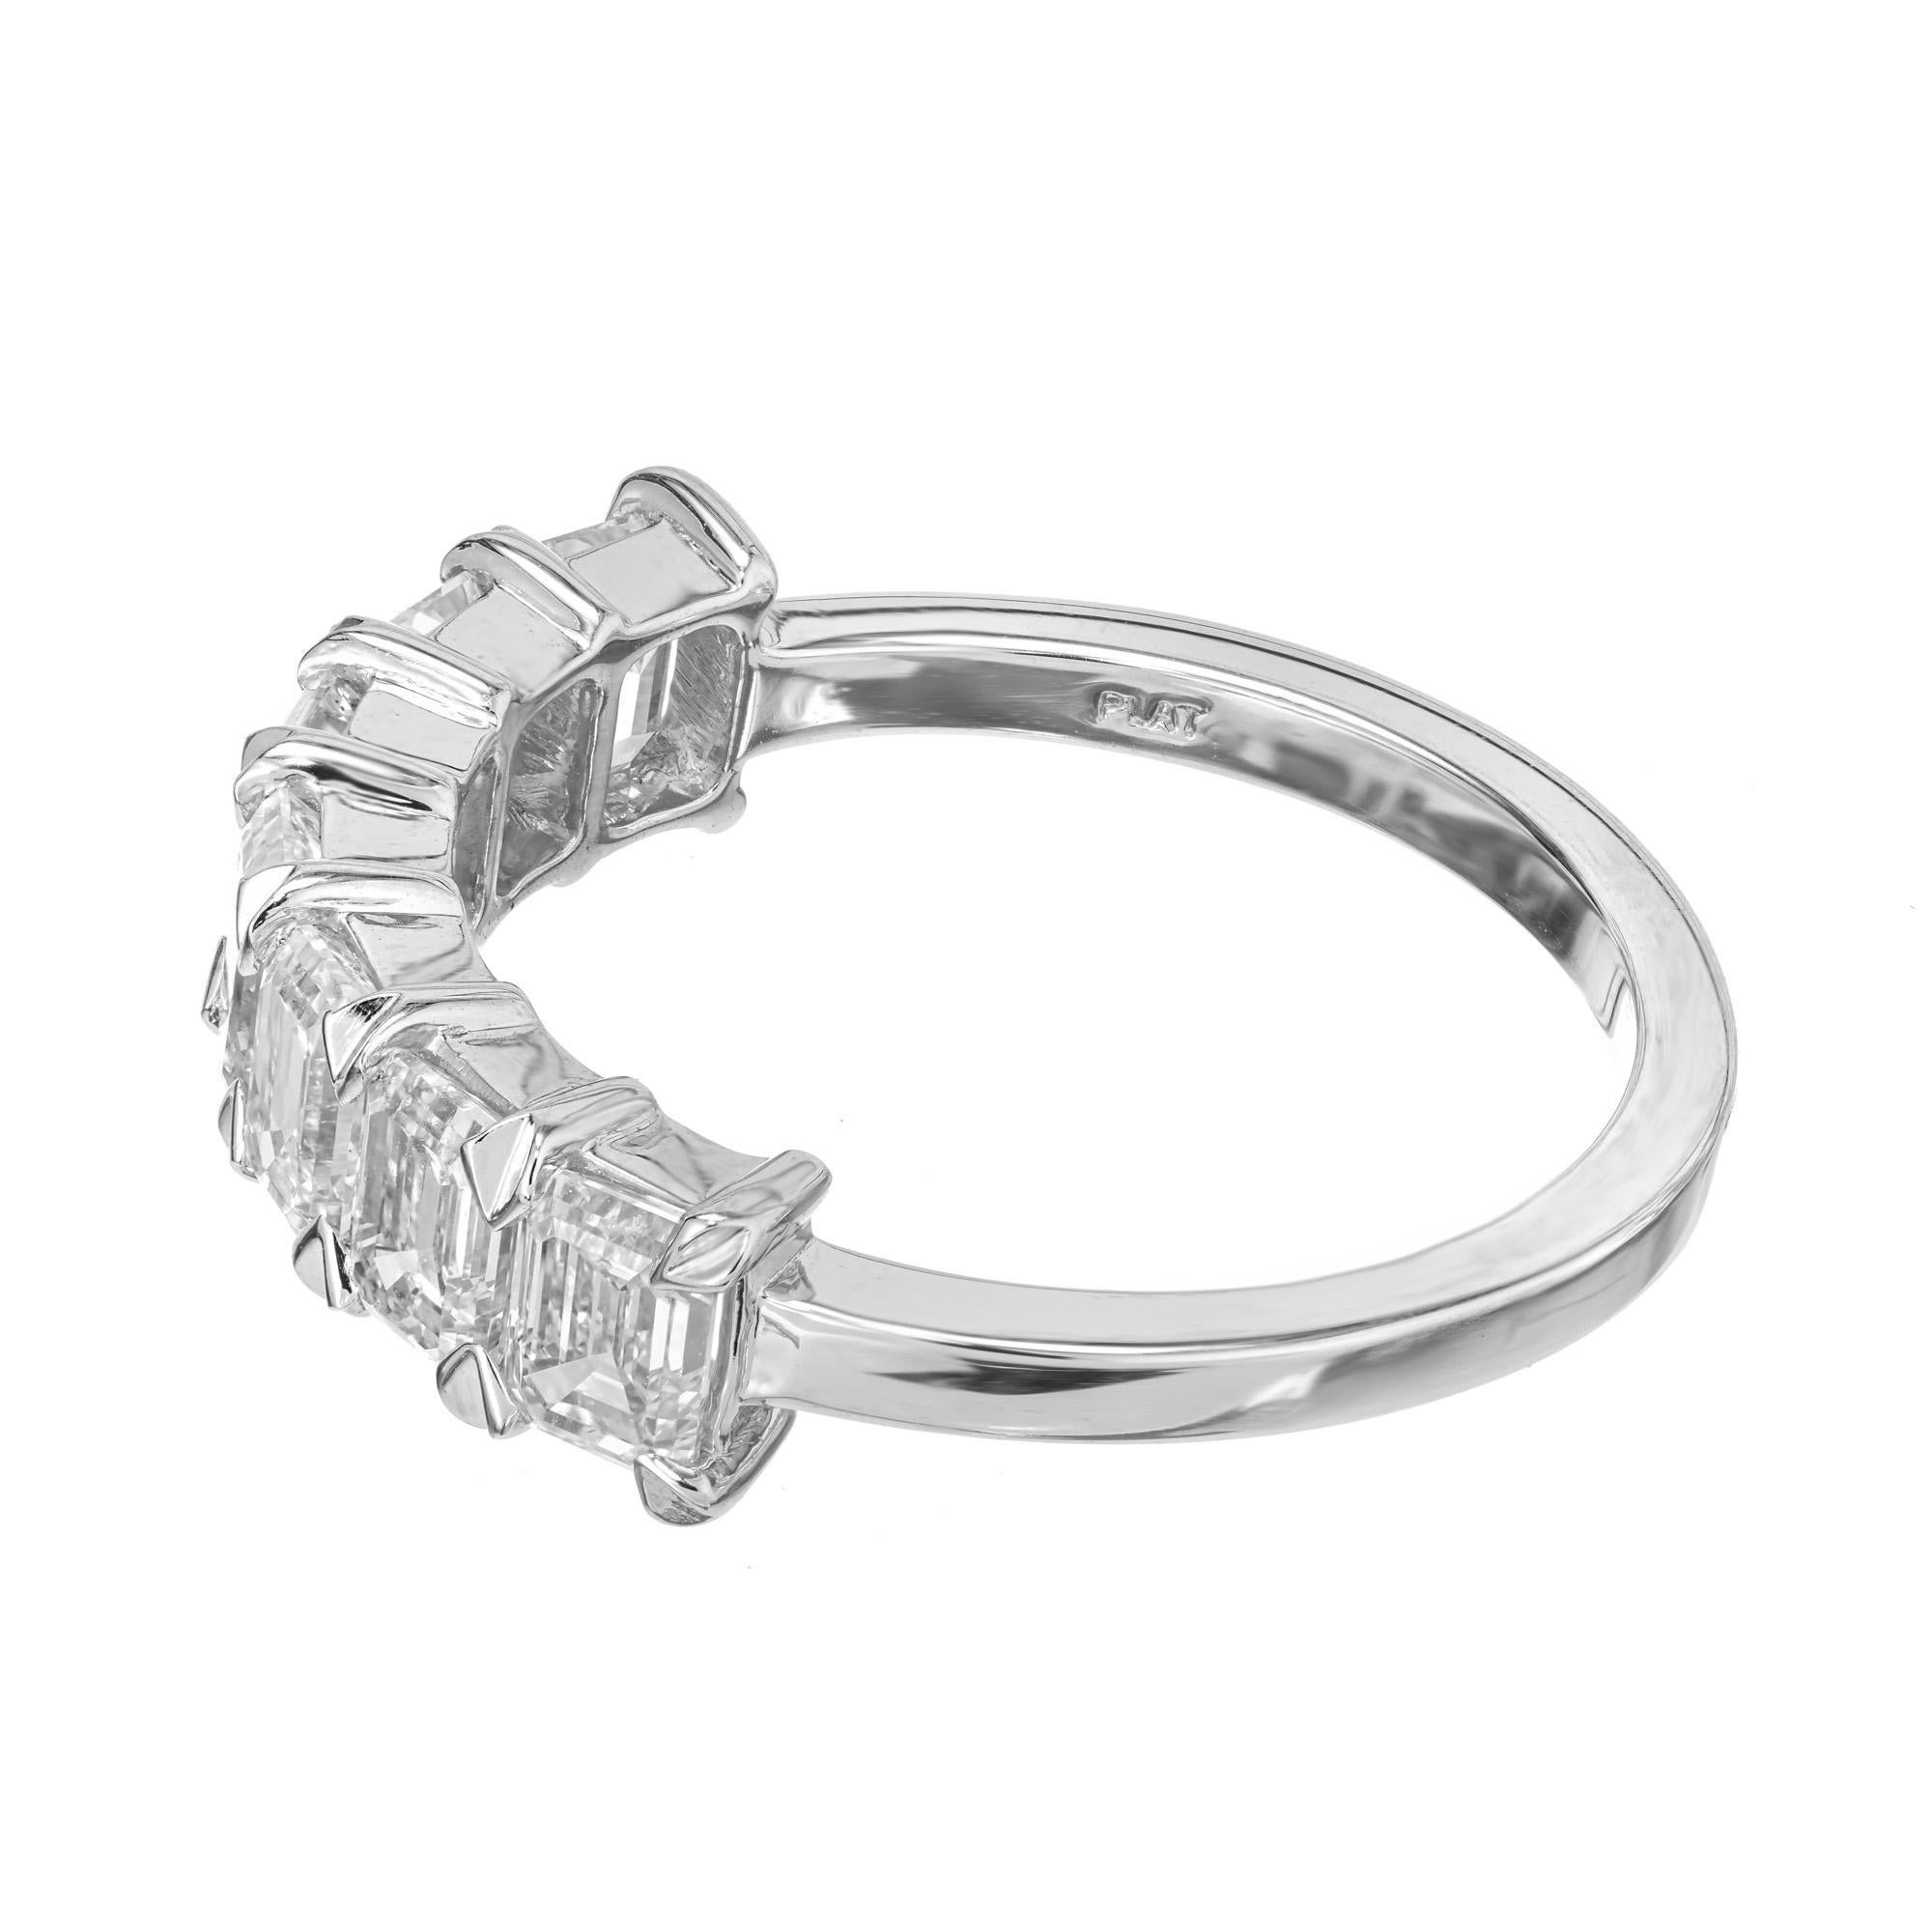 Women's Peter Suchy 2.16 Carat Emerald Cut Diamond Platinum Wedding Band Ring For Sale